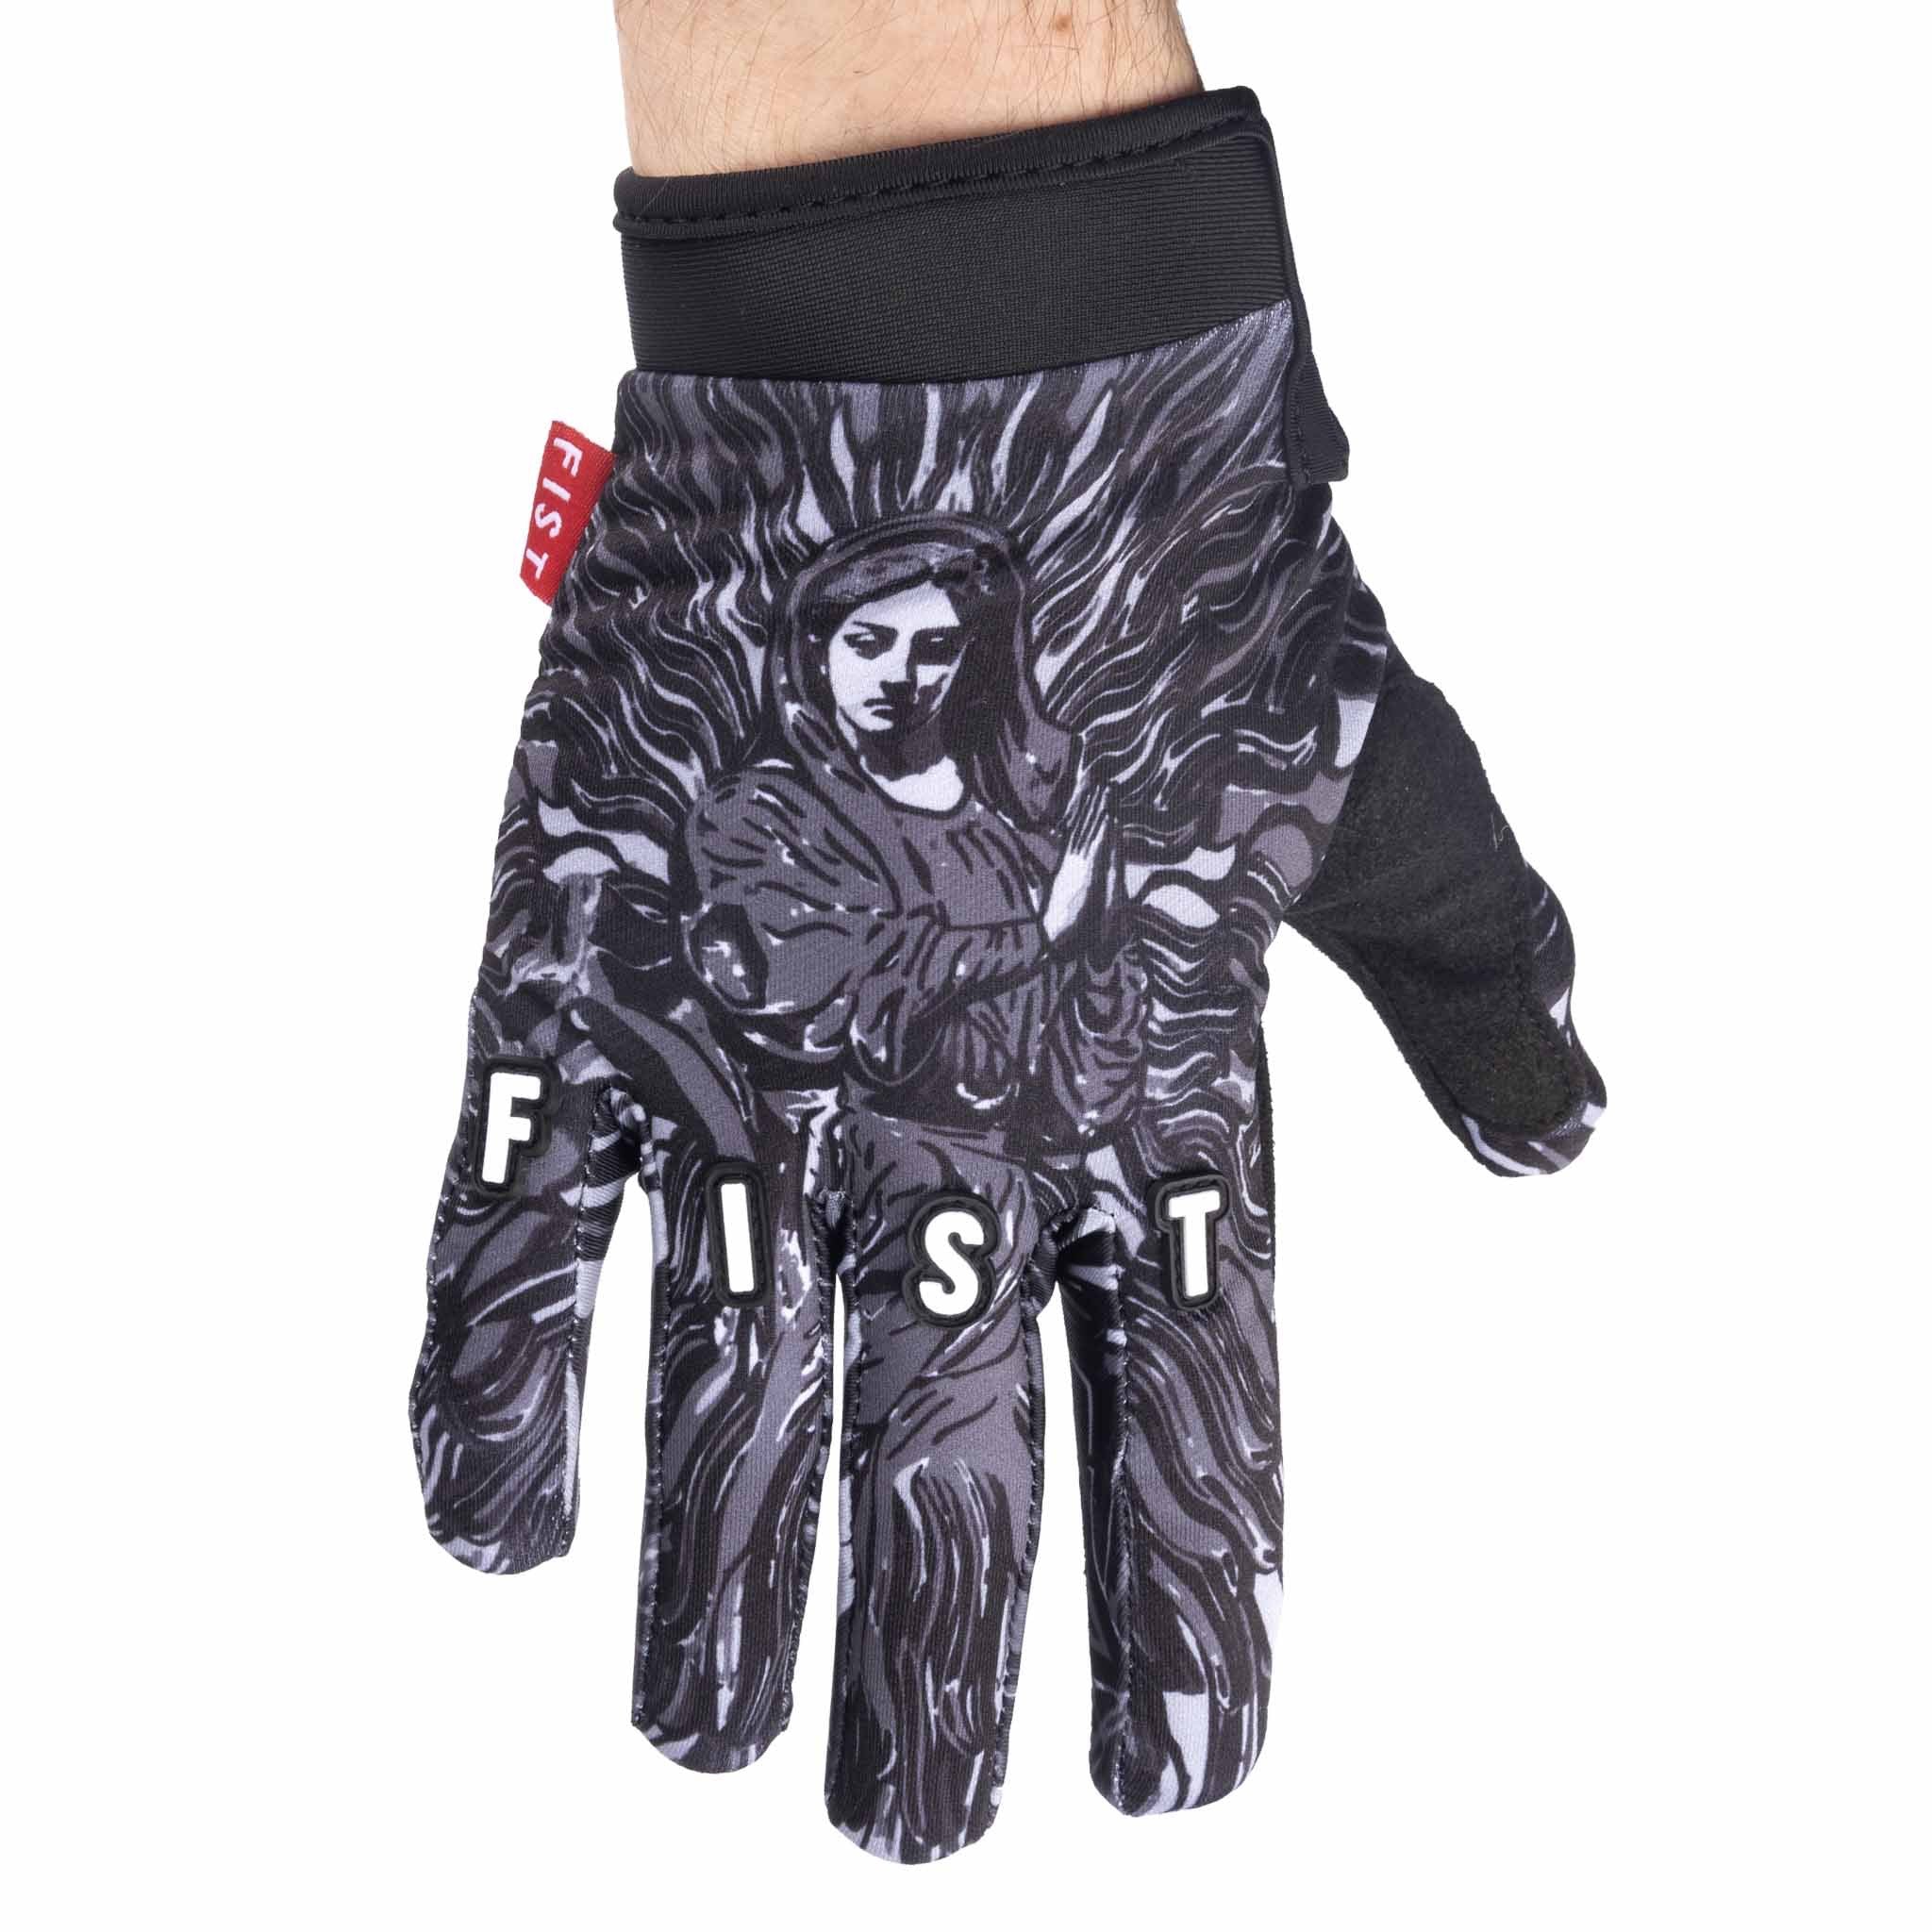 Fist Handwear Chapter 20 Mercy Gloves - Black / Grey top design detail | Backyard UK BMX Shop